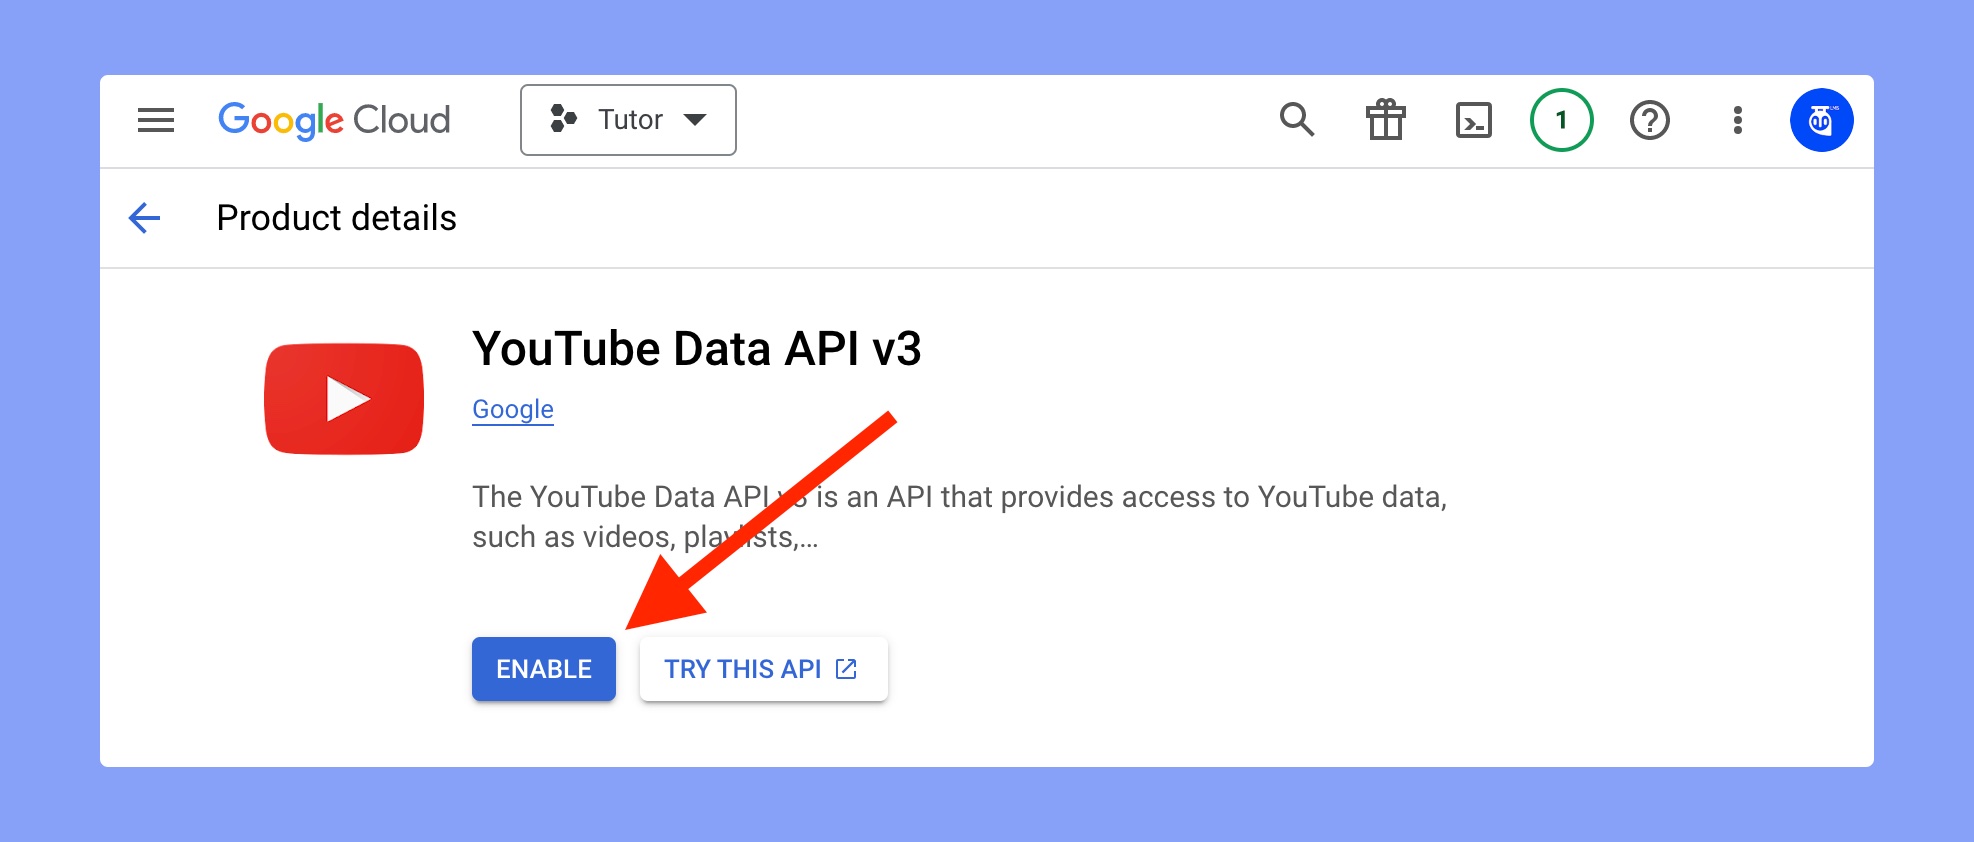 Enable the youtube data api V3